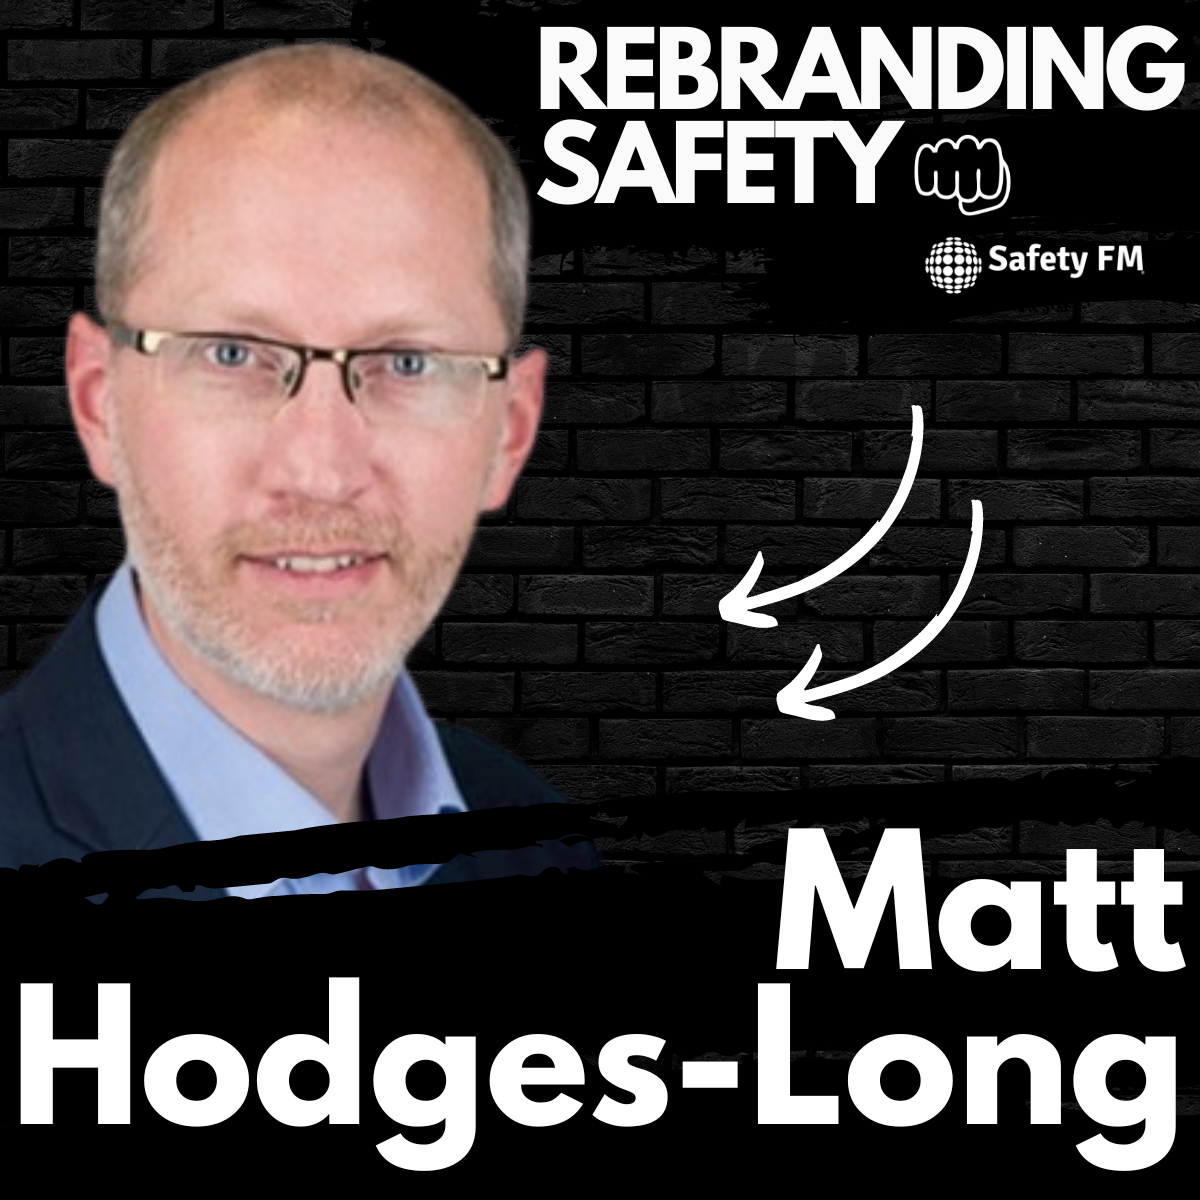 Rebranding Safety - Fire Safety (England) Regulations with Matt Hodges-Long